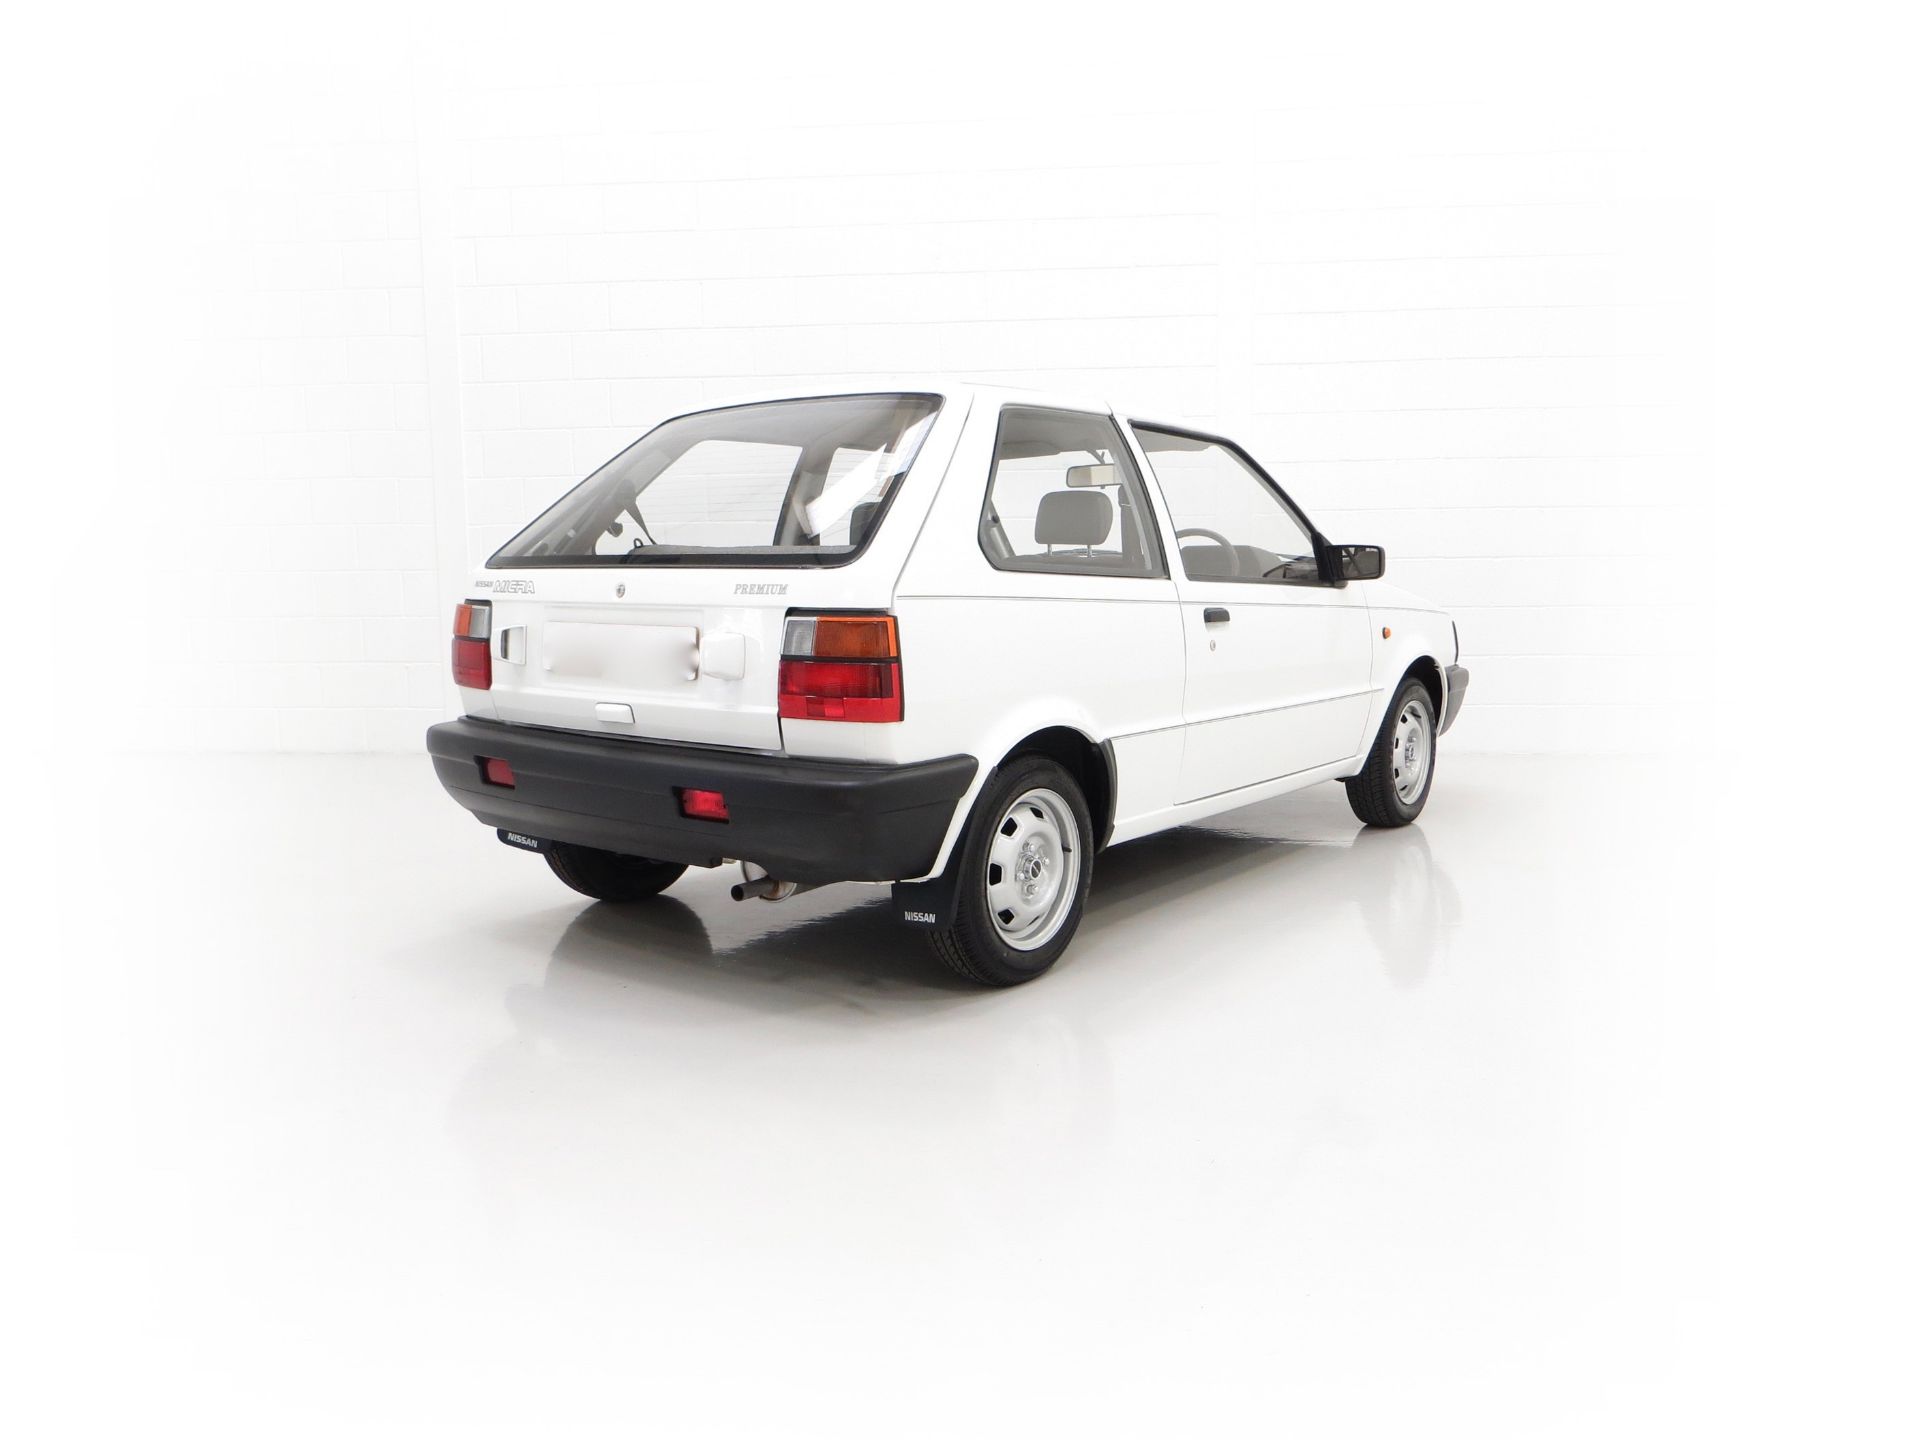 1991, Nissan Micra 1.0 Premium - Image 15 of 118